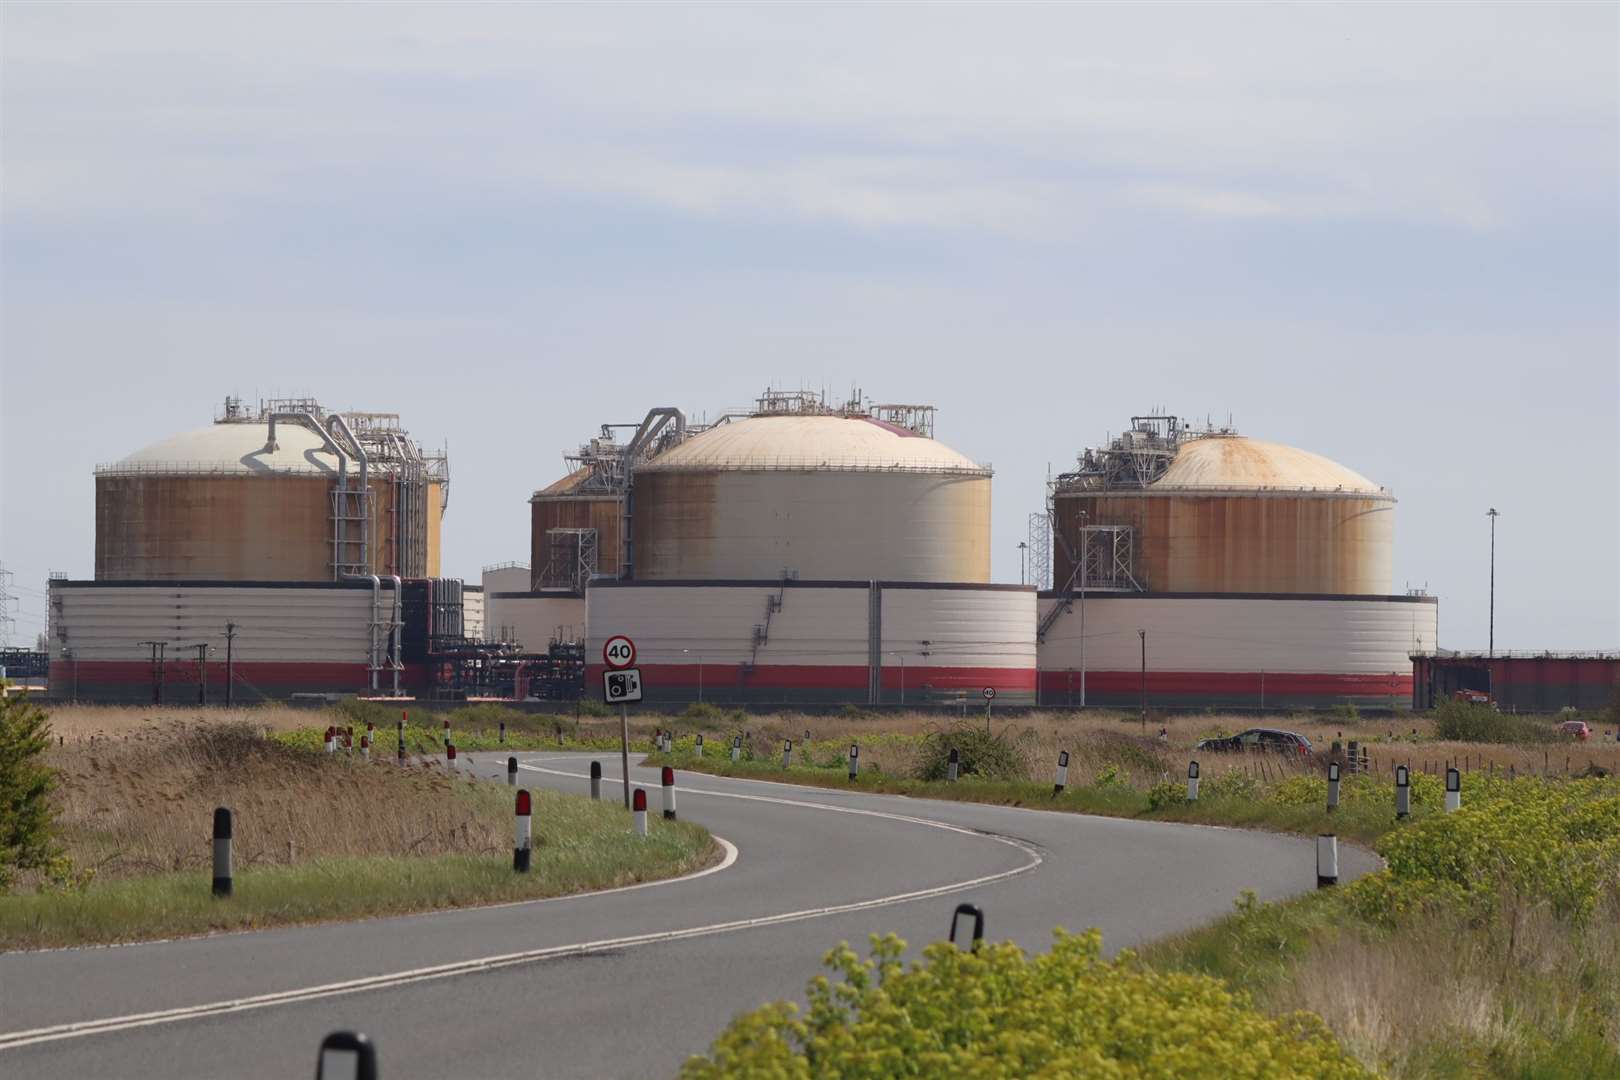 Isle of Grain LNG terminal run by National Grid